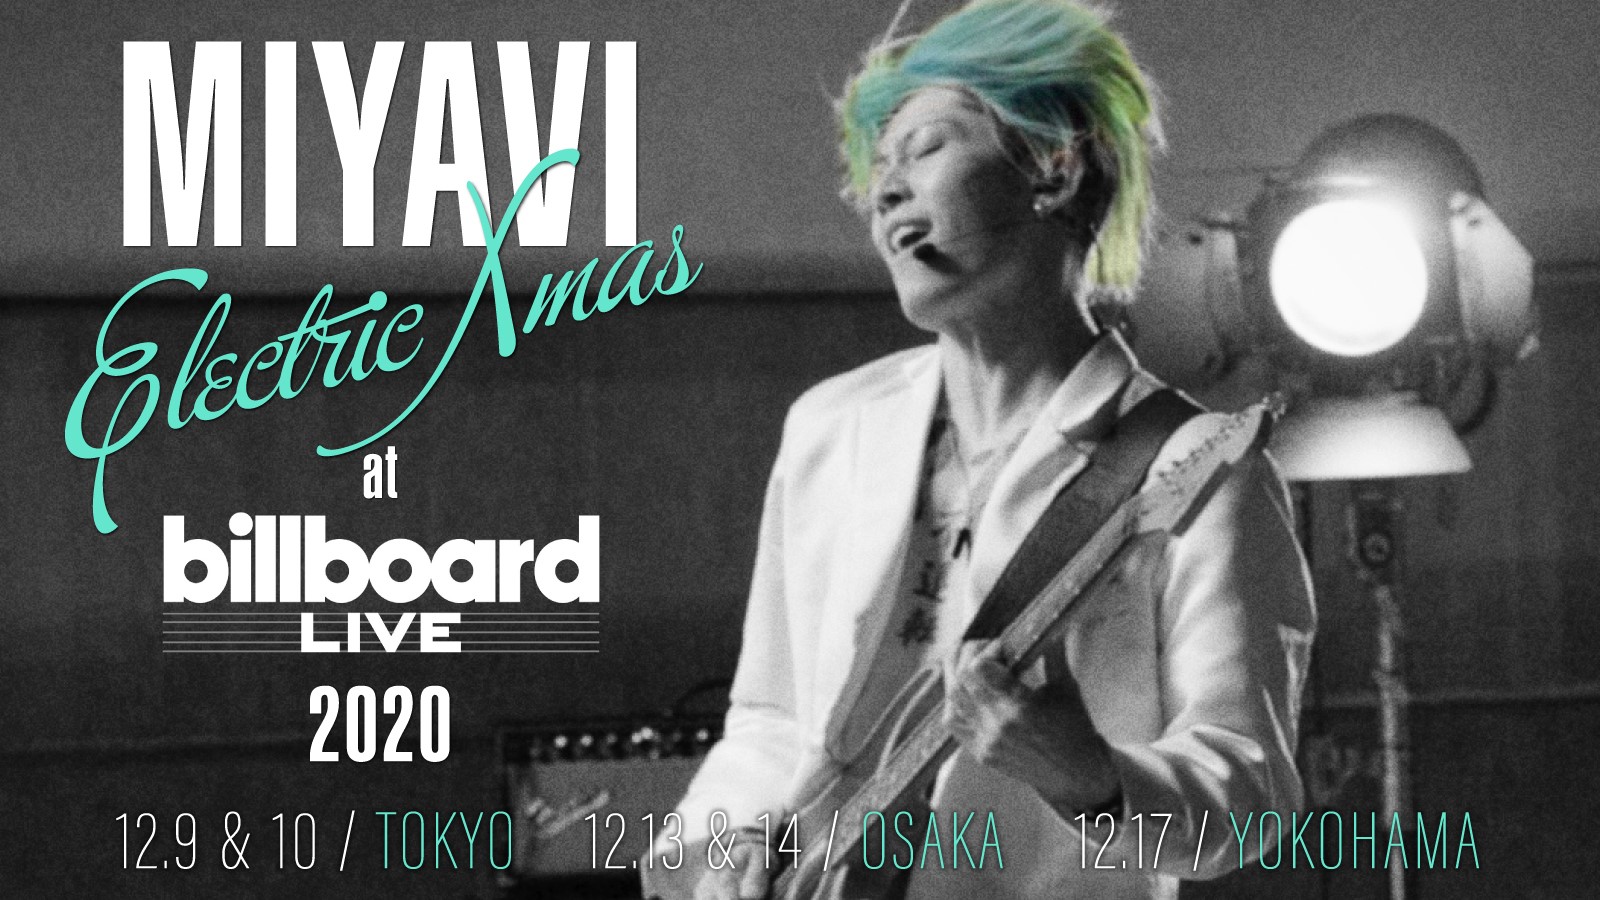 Miyavi Electric Xmas At Billboard Live 12月に東京 大阪 横浜で開催決定 Miyavi